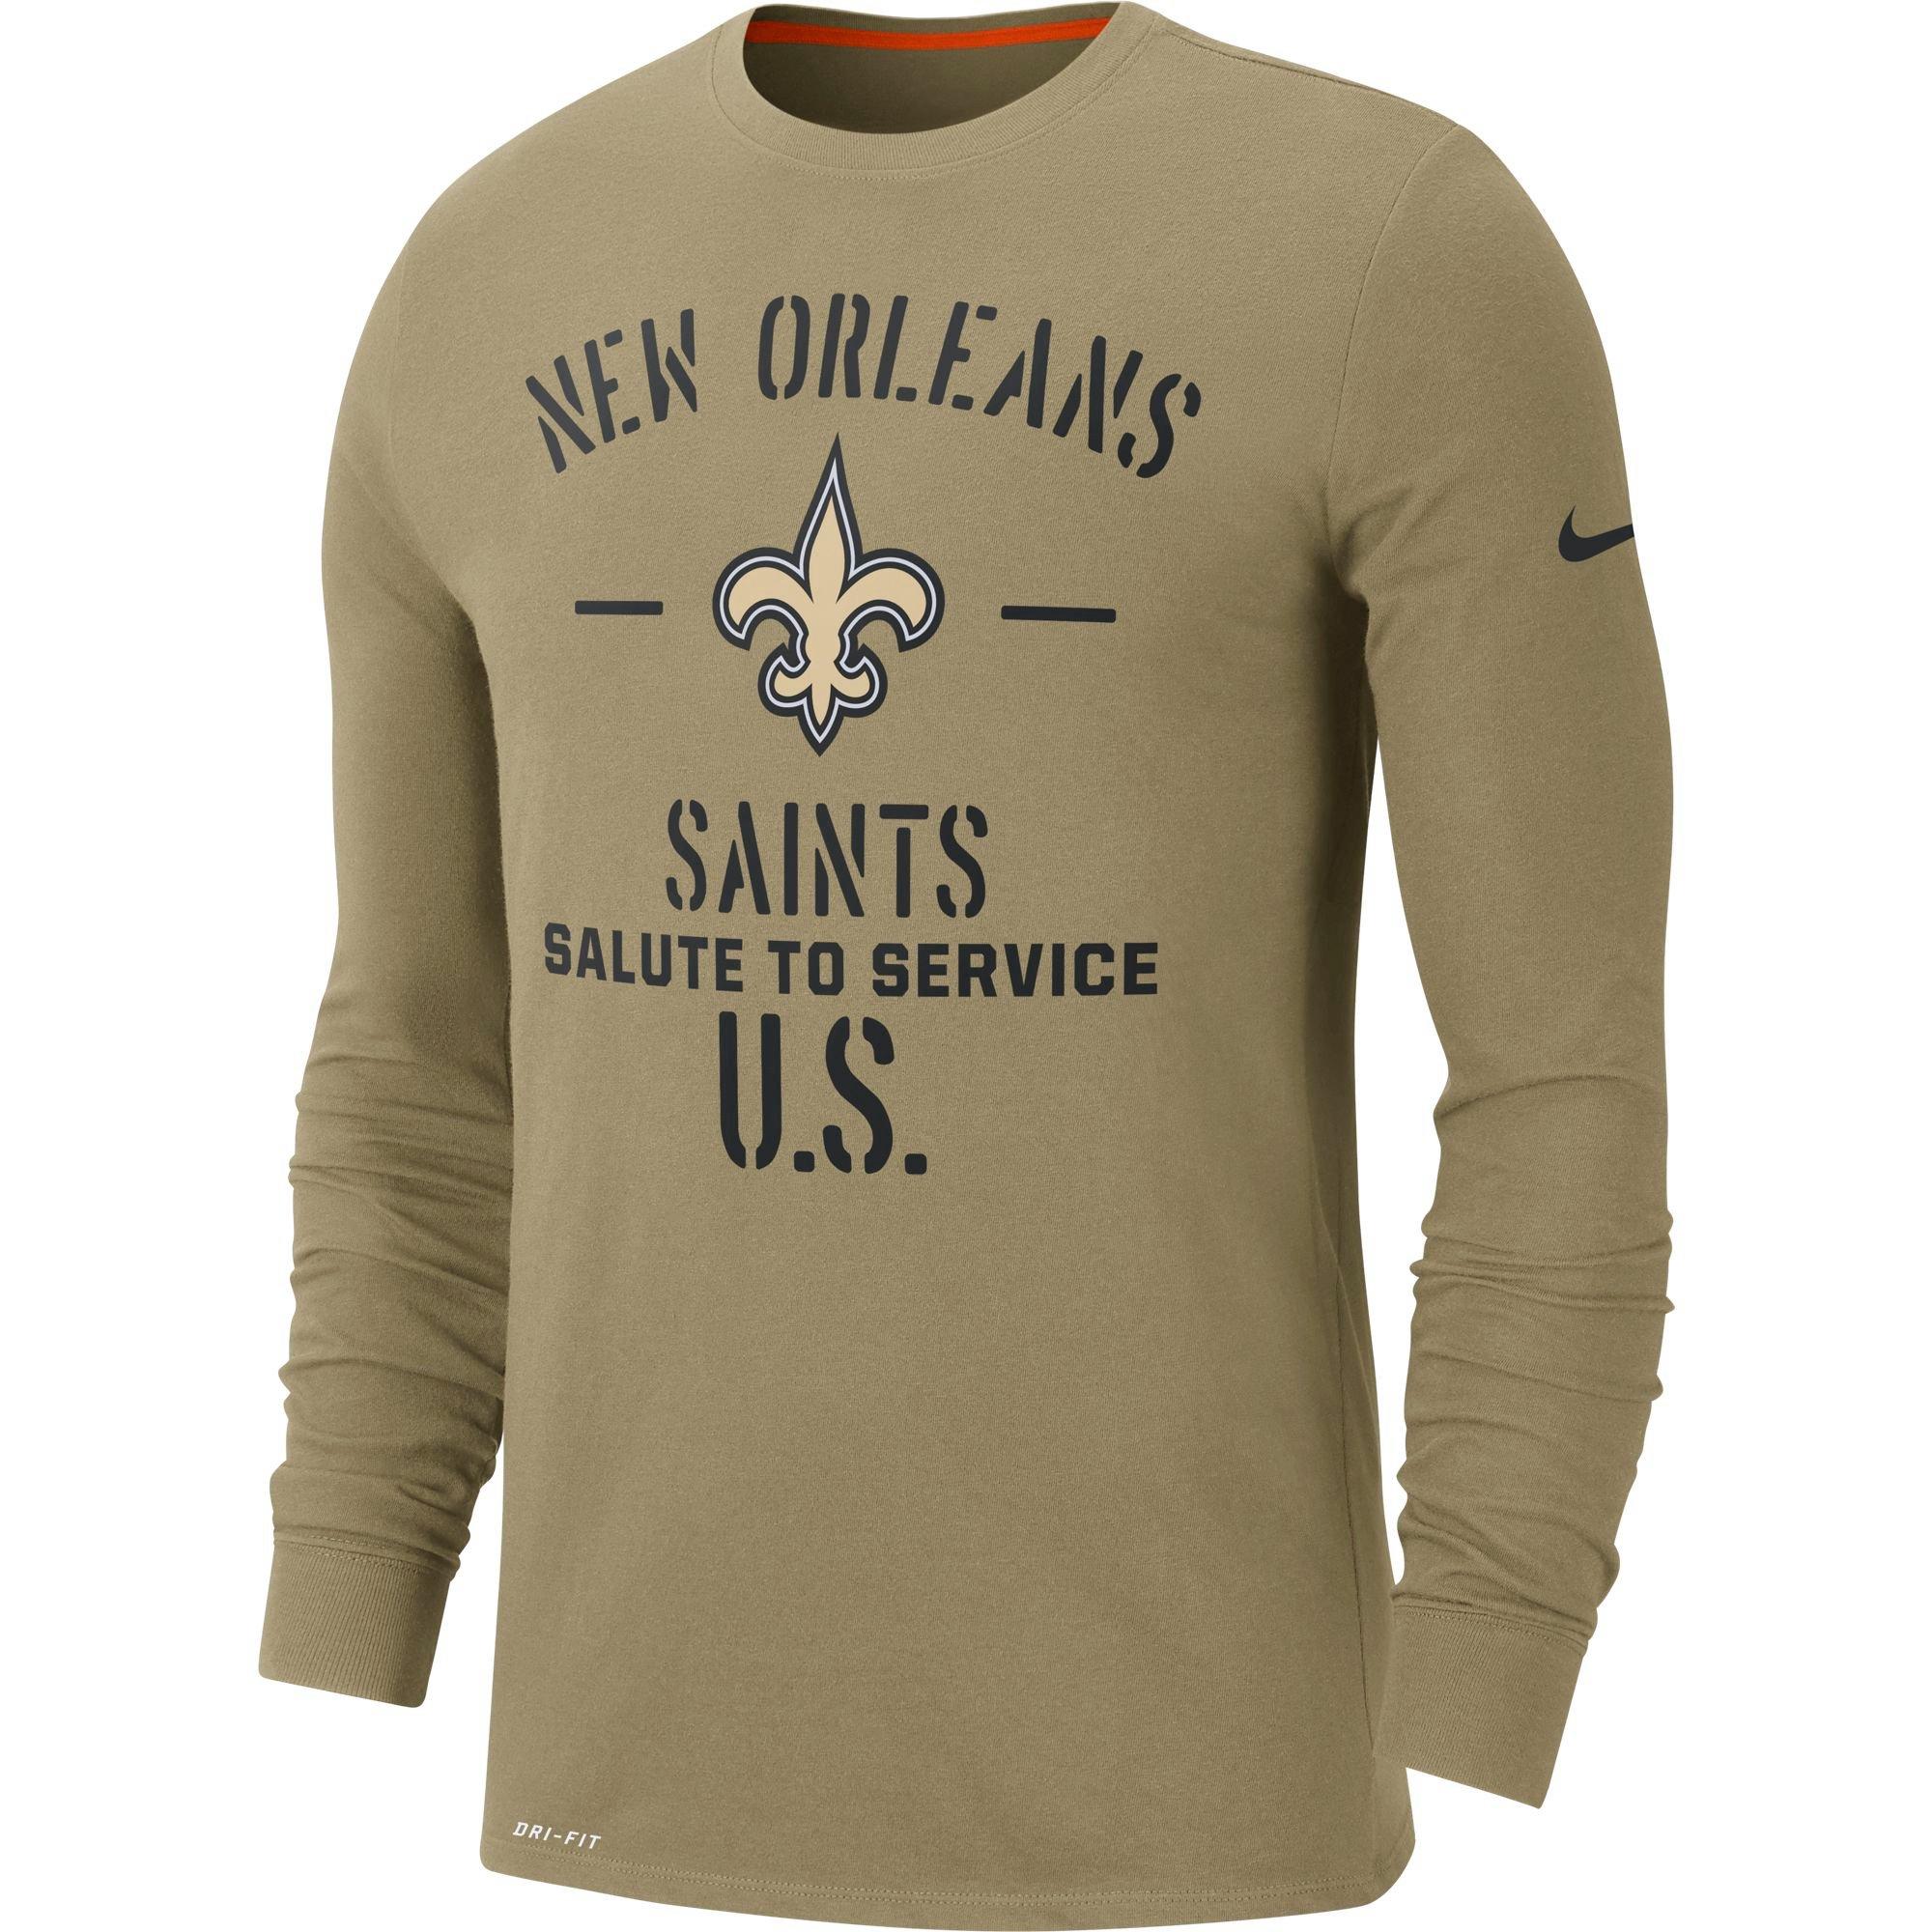 new orleans saints shirts near me